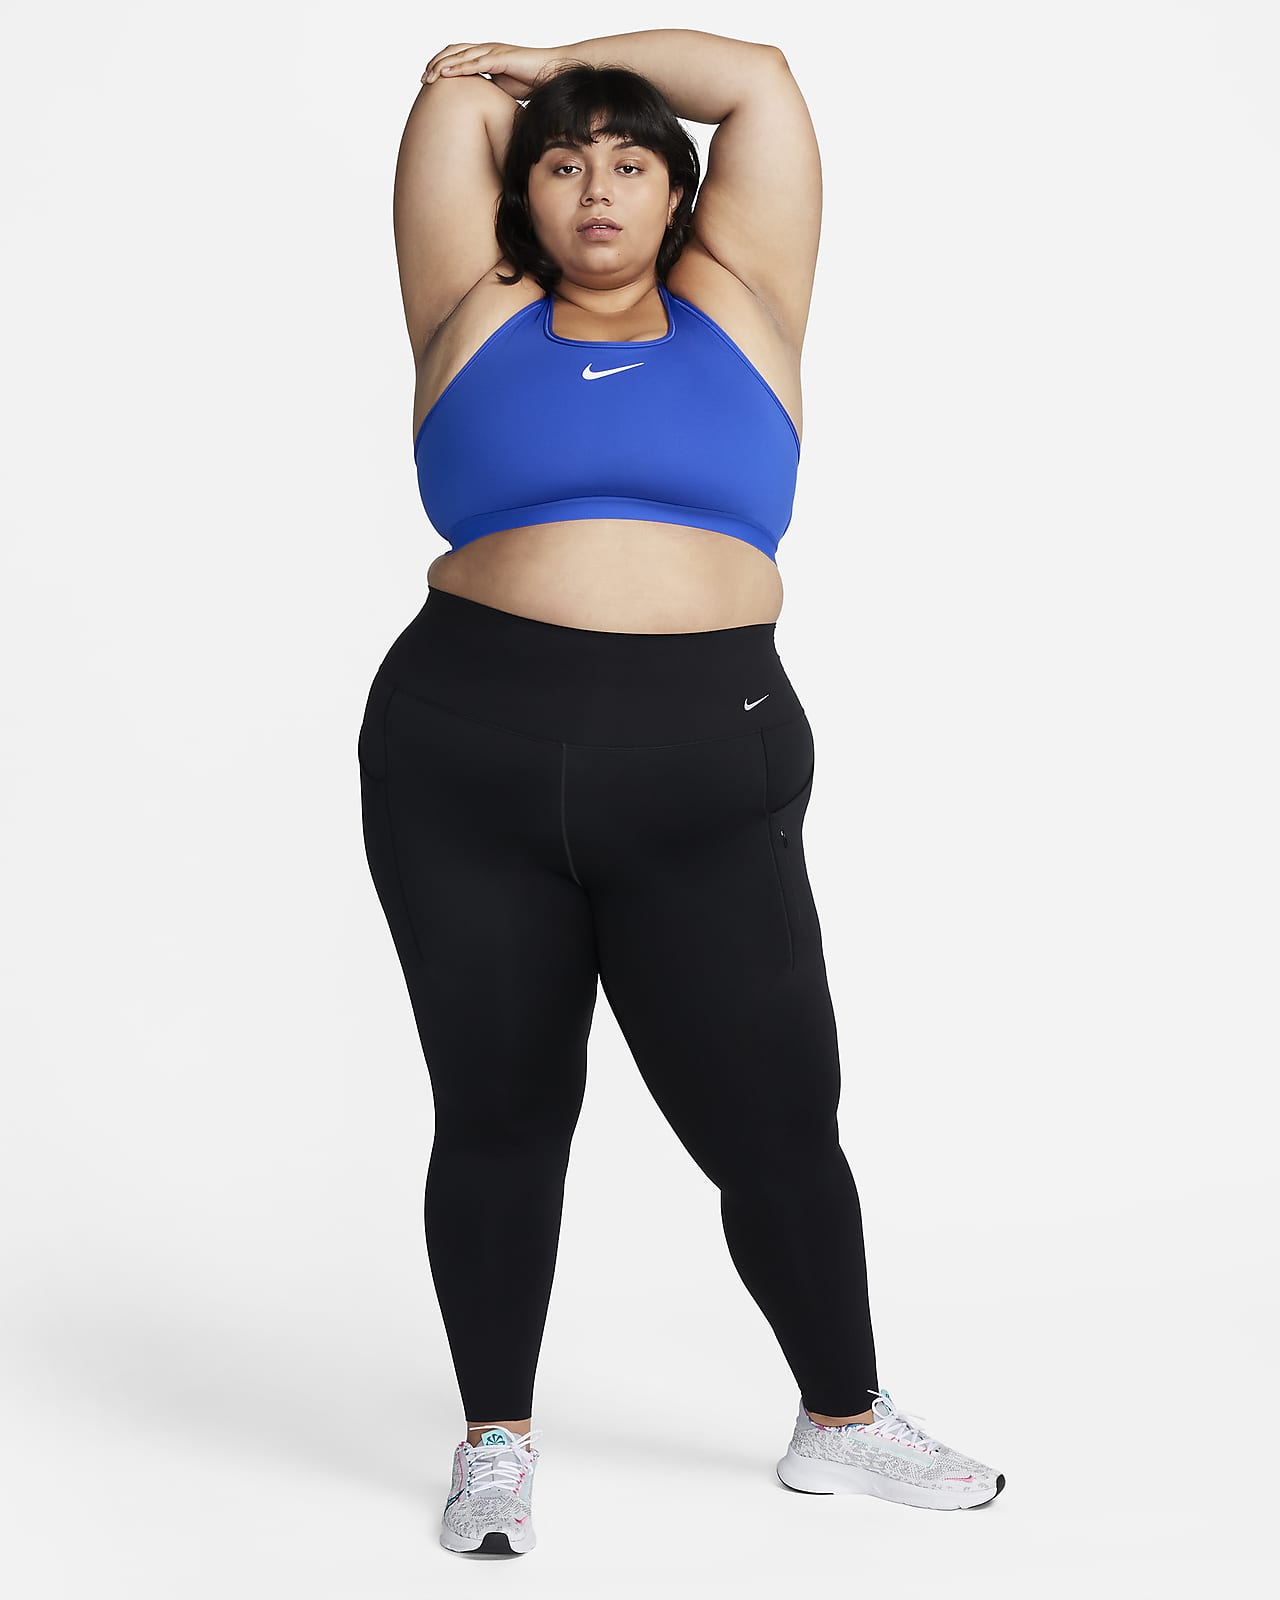 Nike Bra Womens Small White Gray Swoosh Pull On Workout Sports Bra Ladies